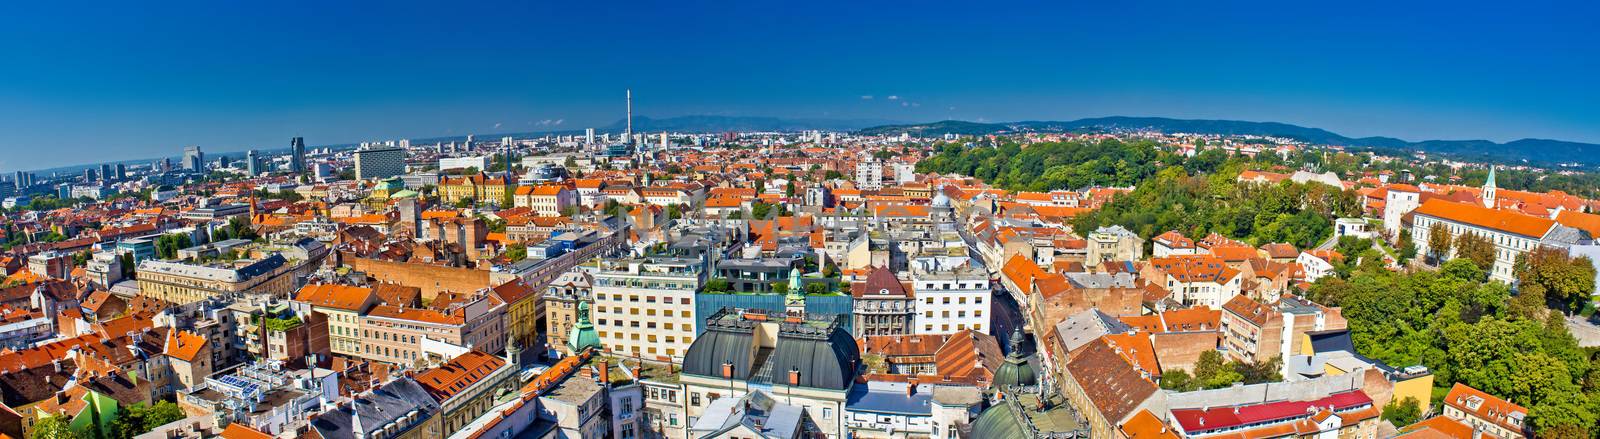 City of Zagreb, capital of Croatia panoramic view